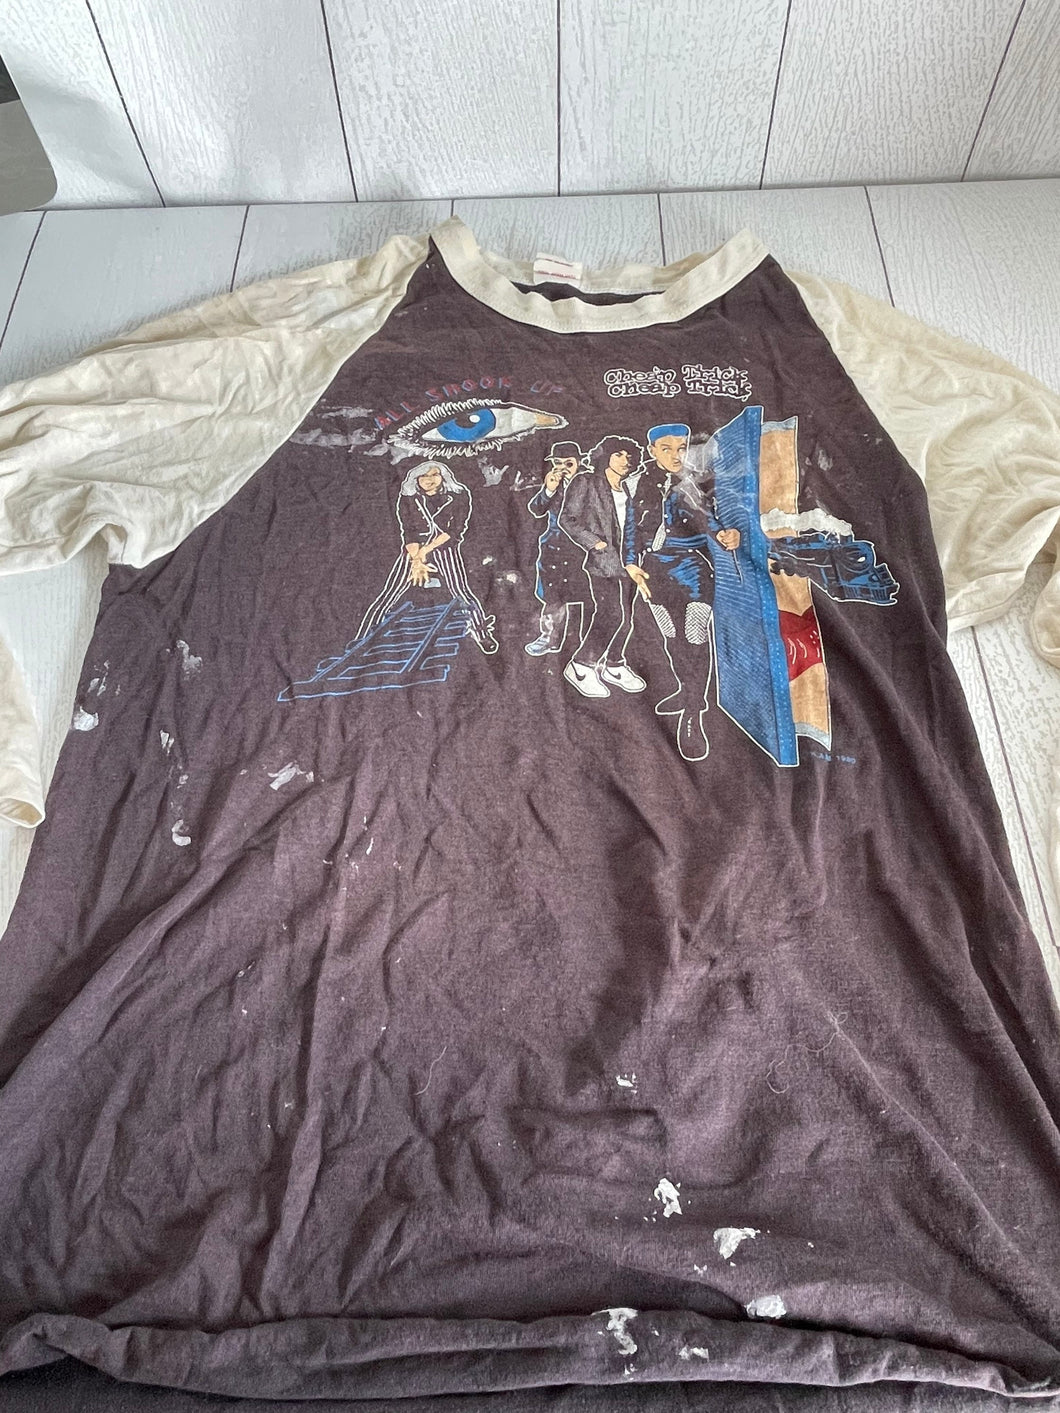 Vintage Cheap Trick All Shook Up World Tour 1980-1981 band t-shirt.